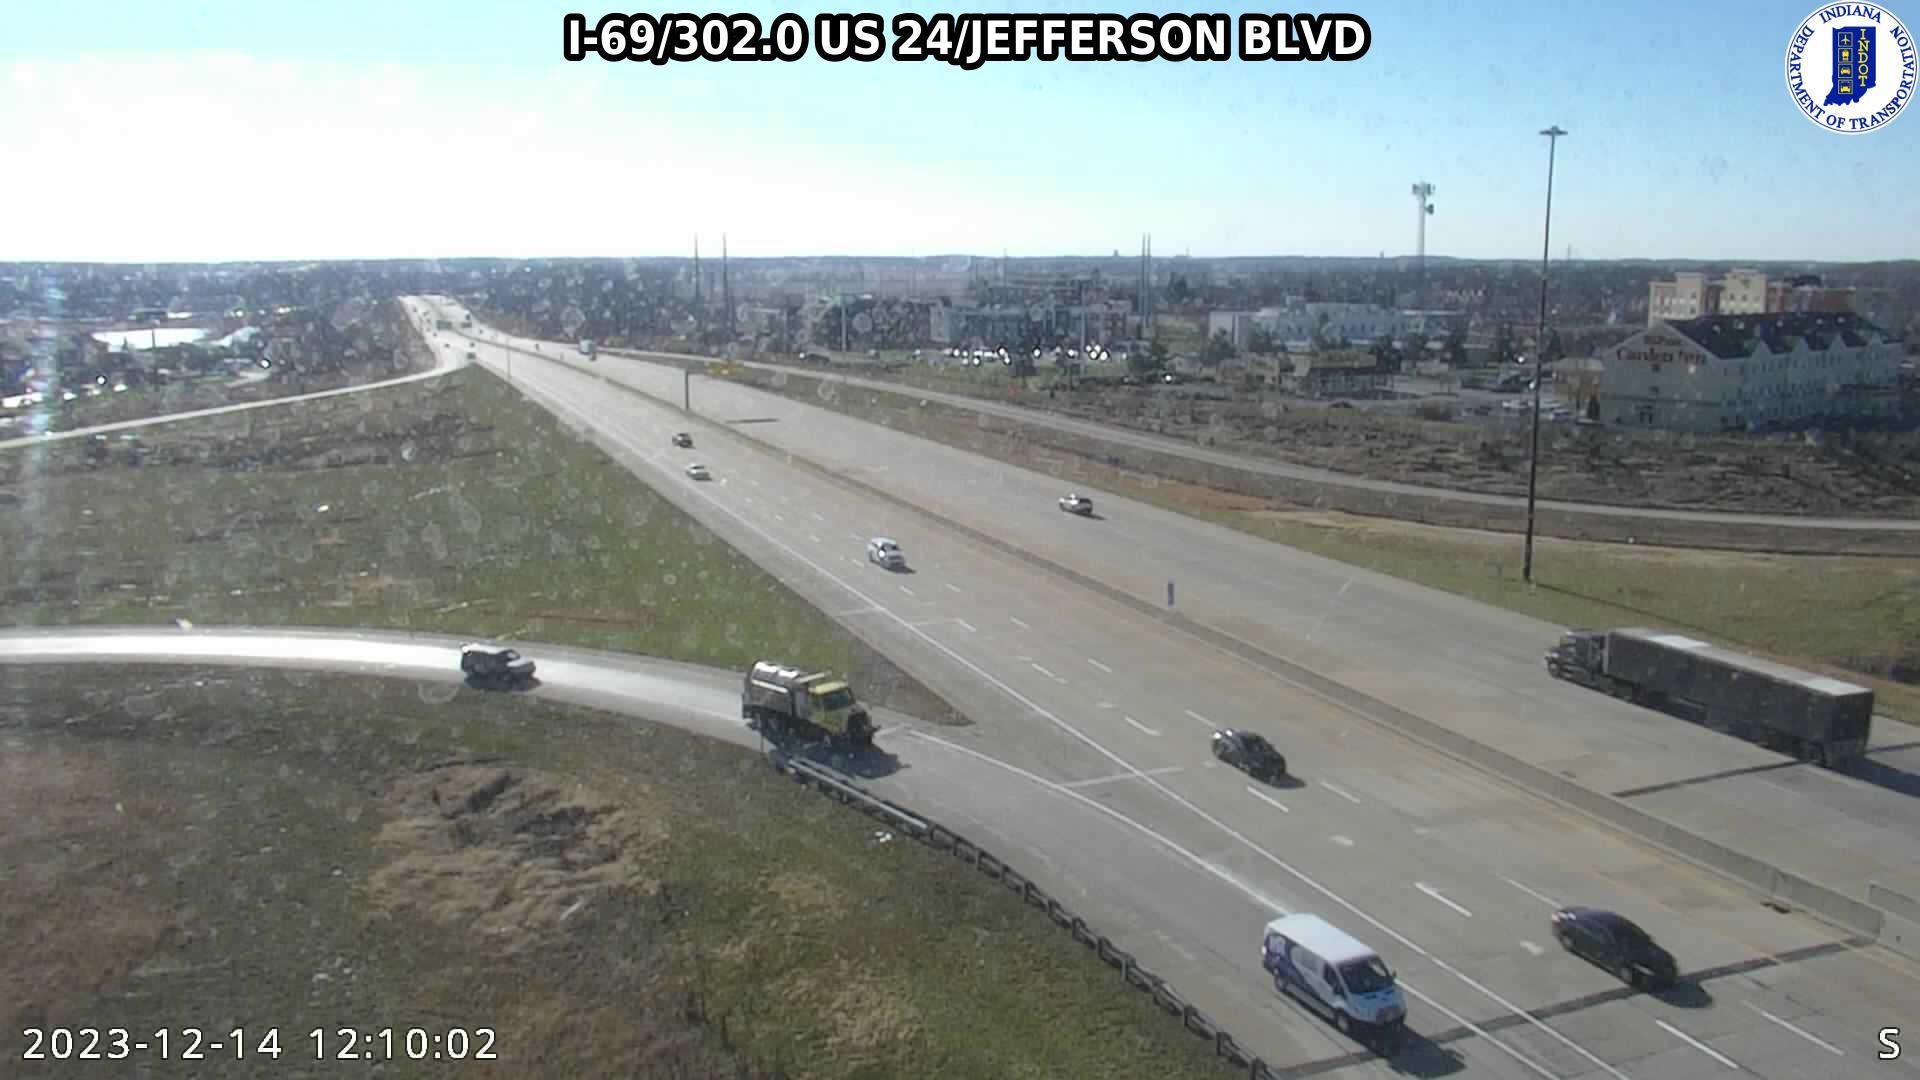 Fort Wayne: I-69: I-69/302.0 US 24/JEFFERSON BLVD Traffic Camera